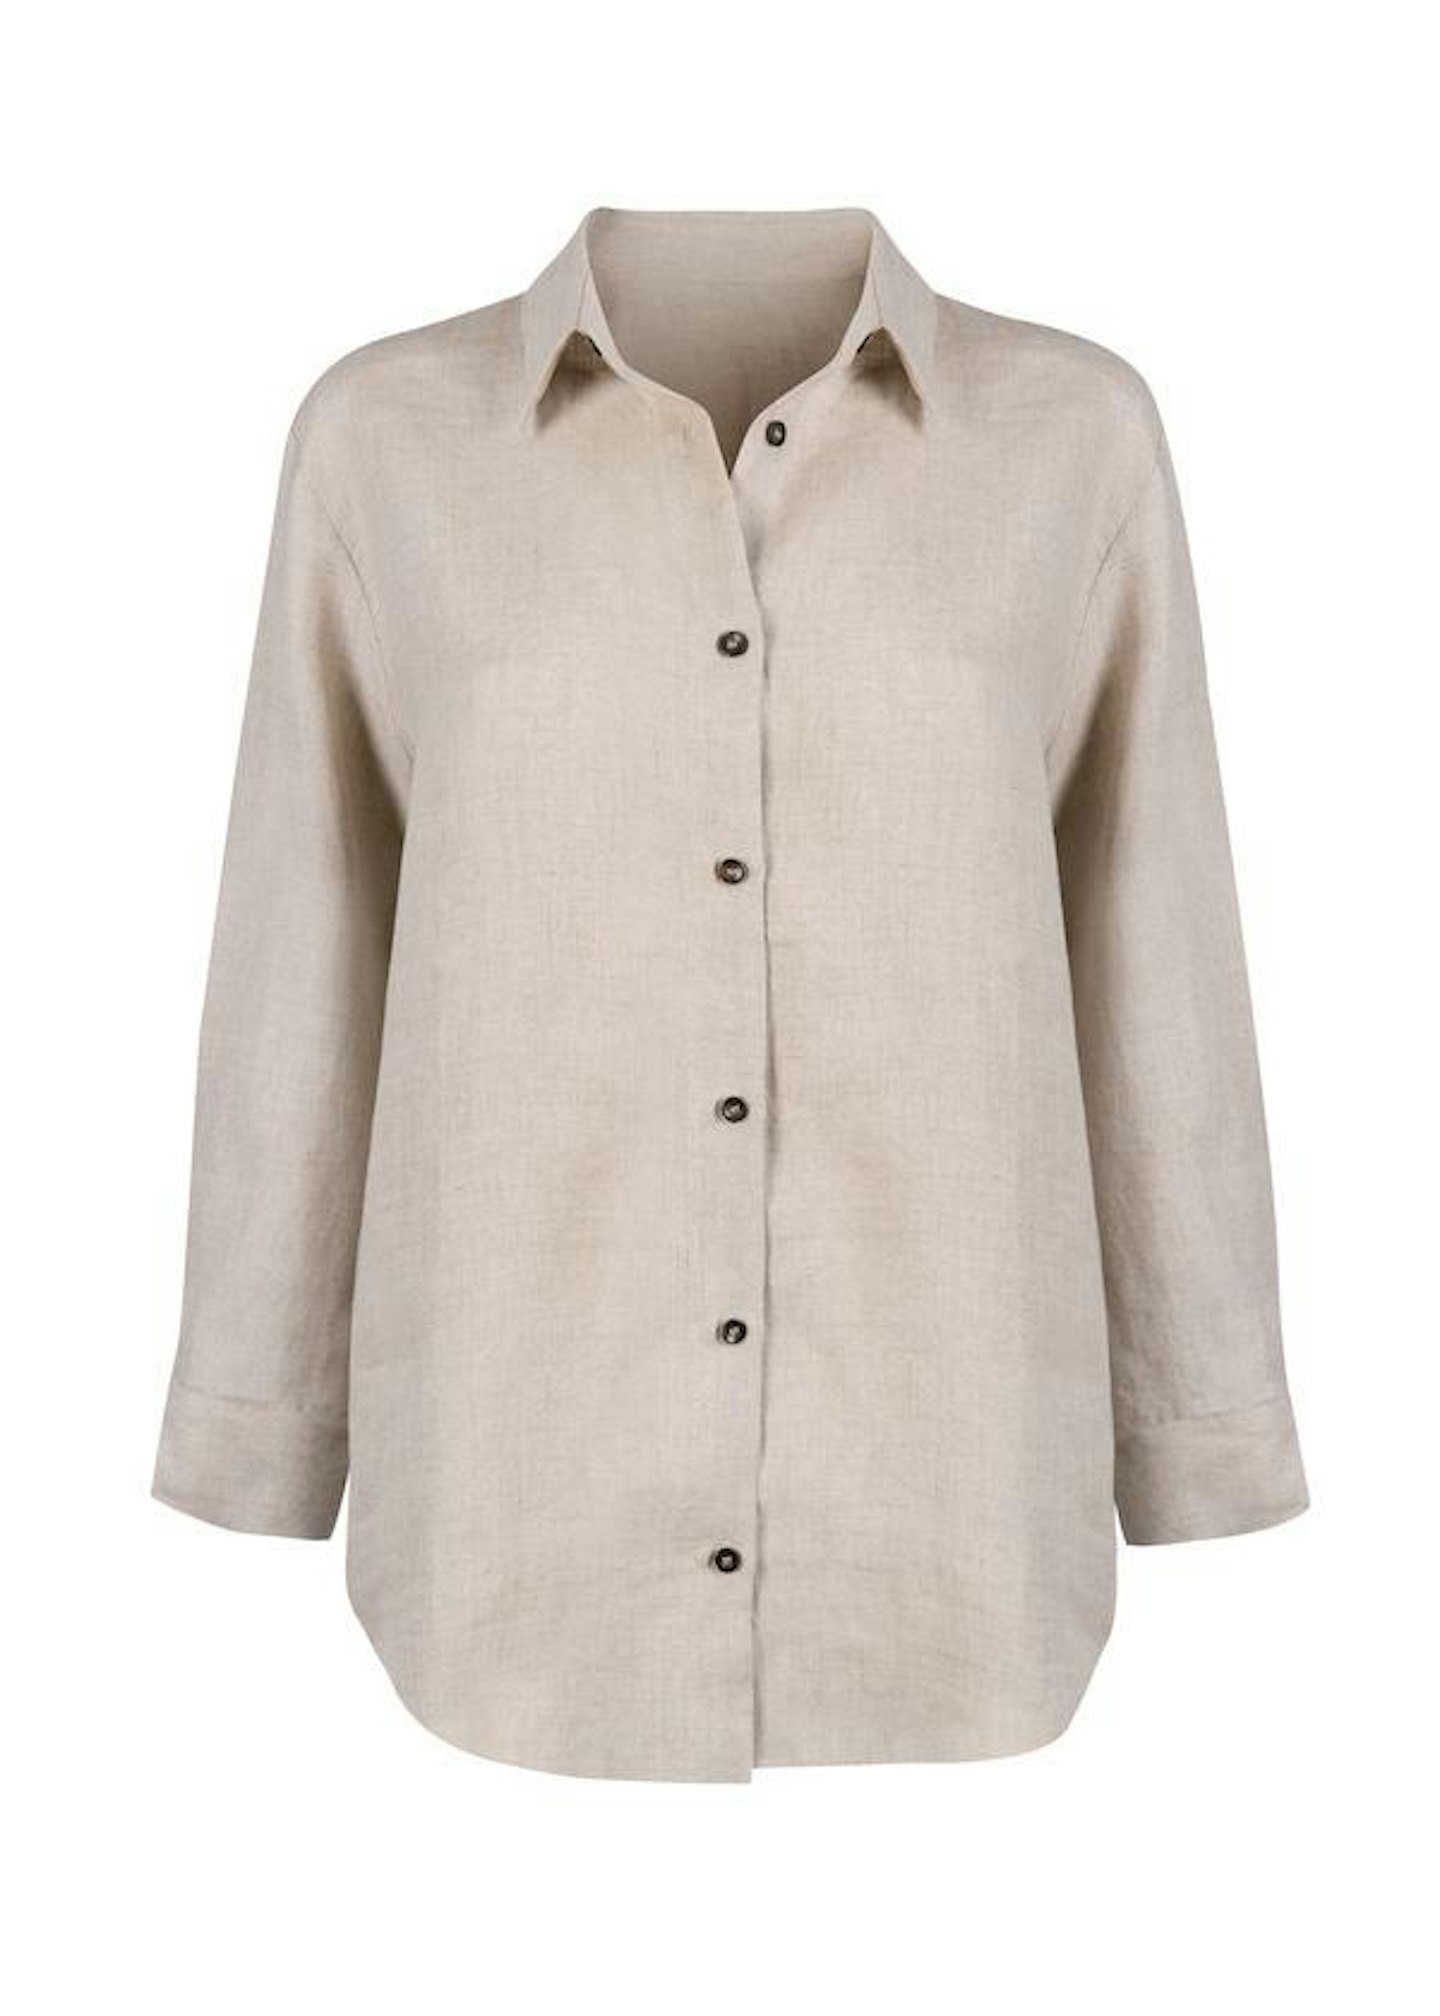 Asceno, Milan Oat Linen Shirt, £225